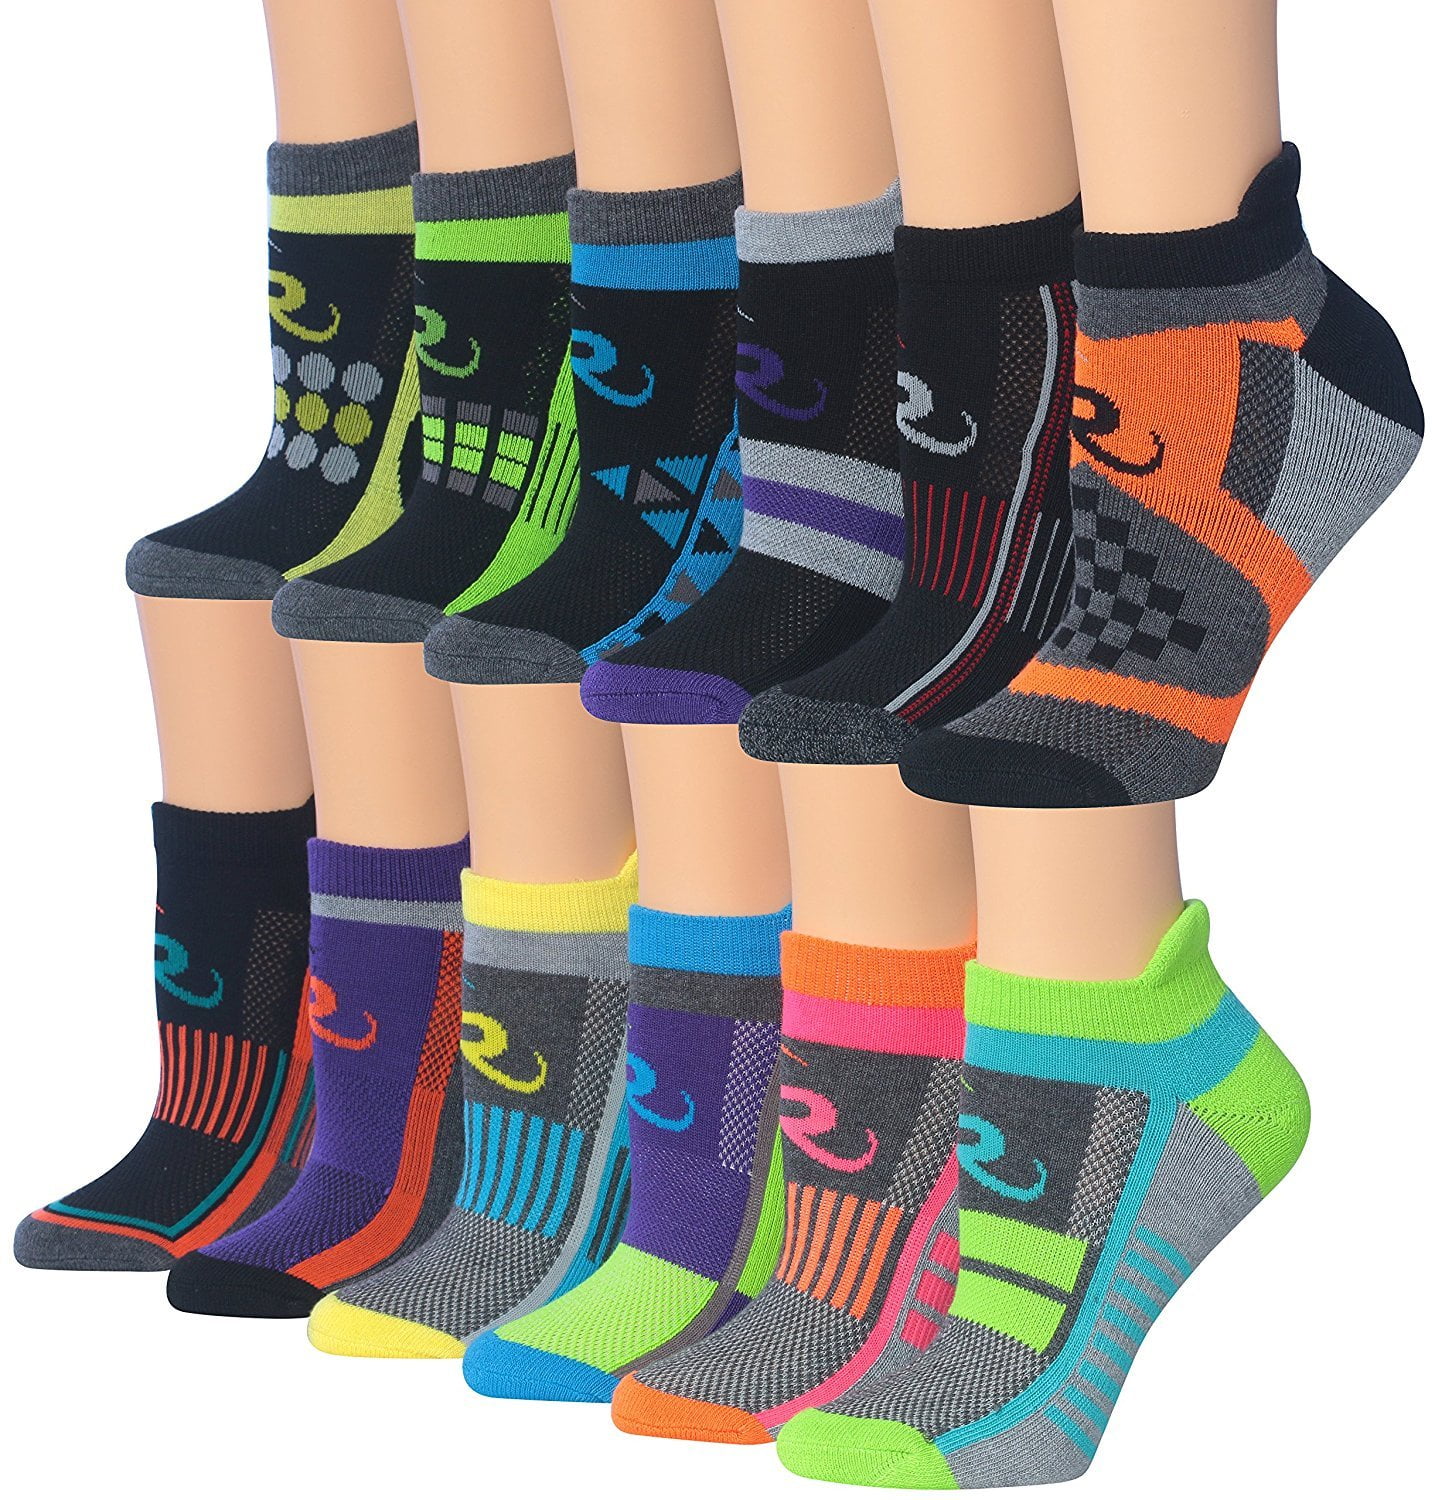 Ronnox Women's 12-Pairs Low Cut Running & Athletic Performance Tab Socks  (X-Small/Small (womens shoe: 5 6 7), Colorful Sports) RLT12-AB-XS -  Walmart.com